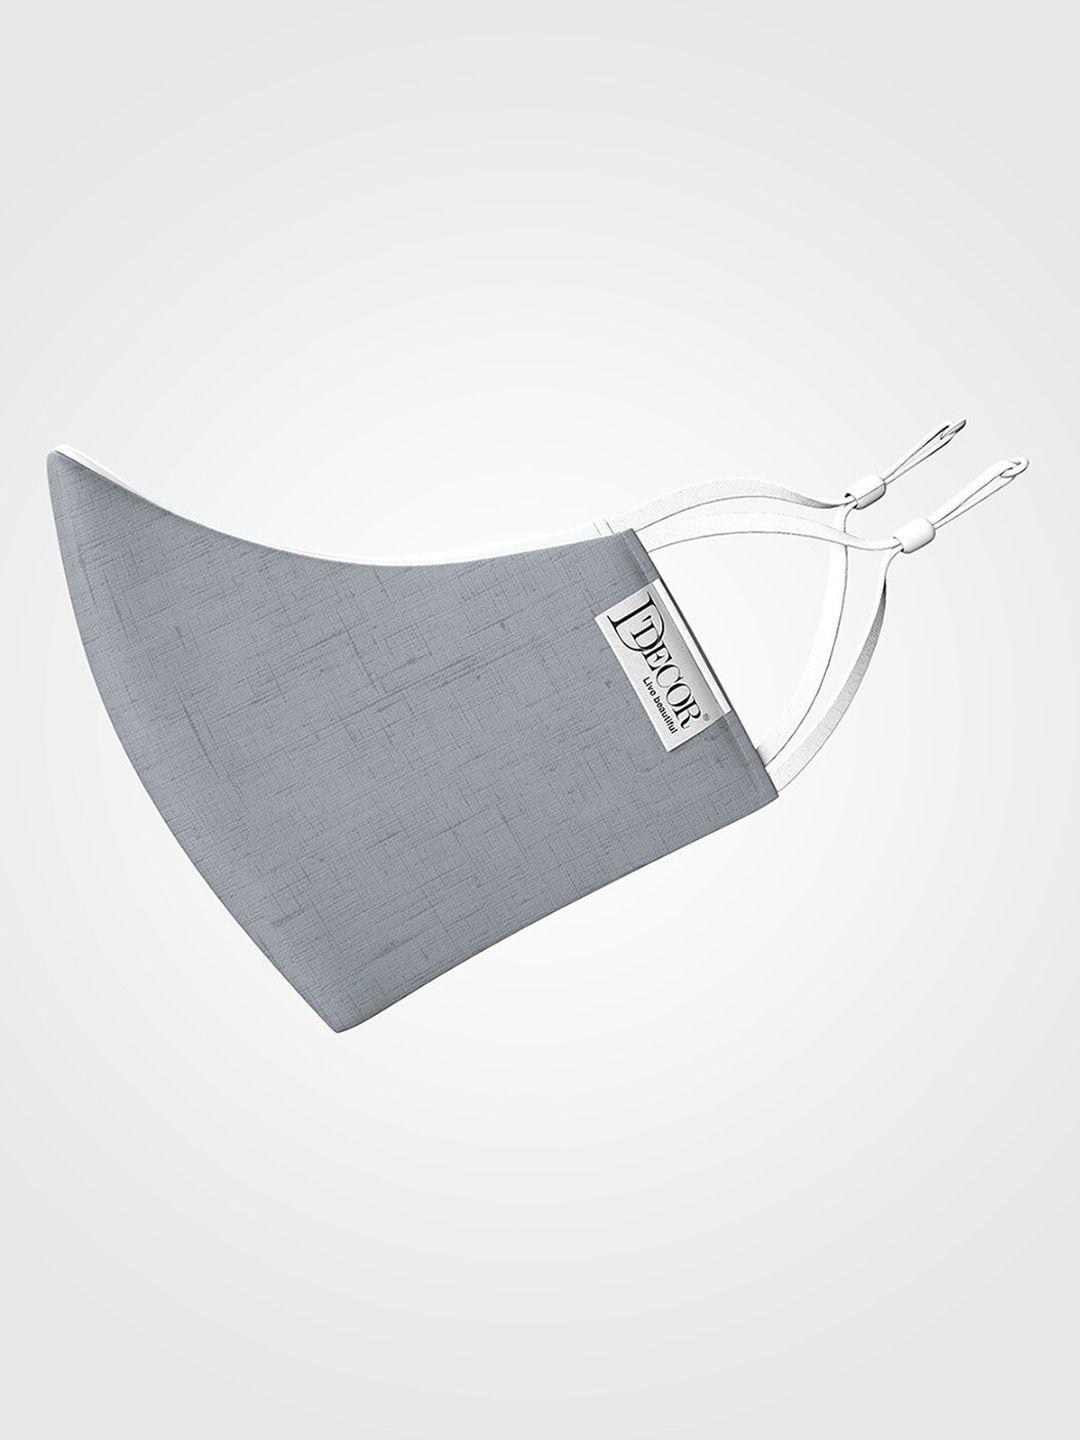 ddecor unisex grey solid 3-ply cotton cloth mask